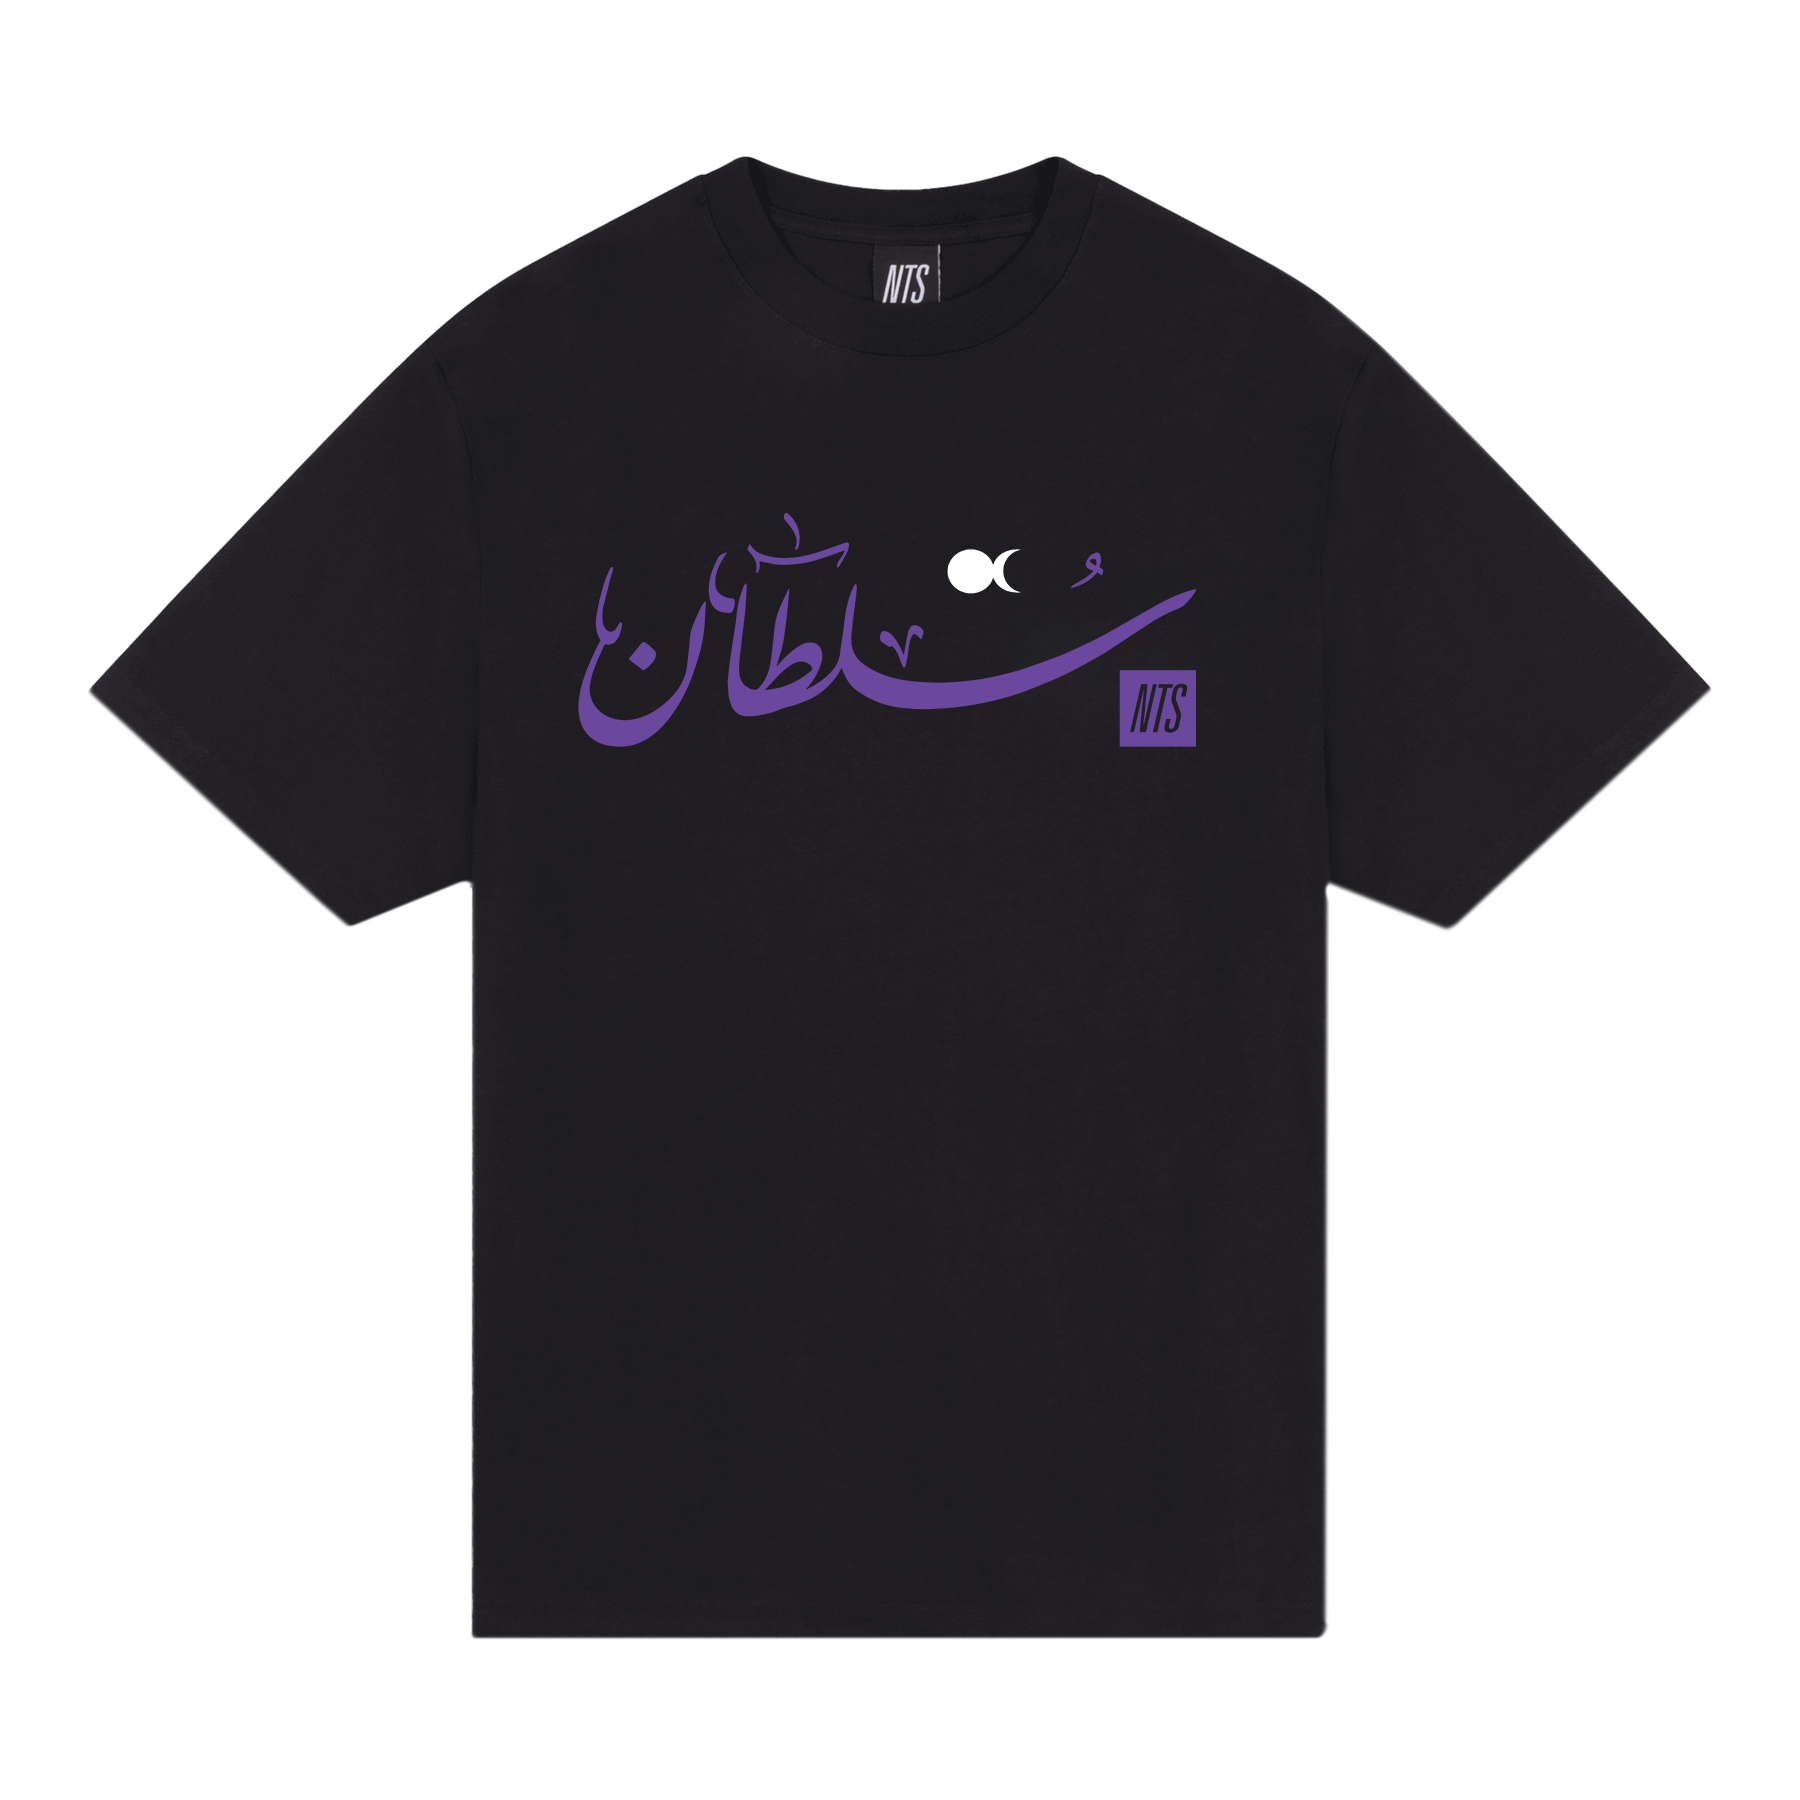 NTS RADIO - Shabjdeed & Al Nather - Sultan T-Shirt